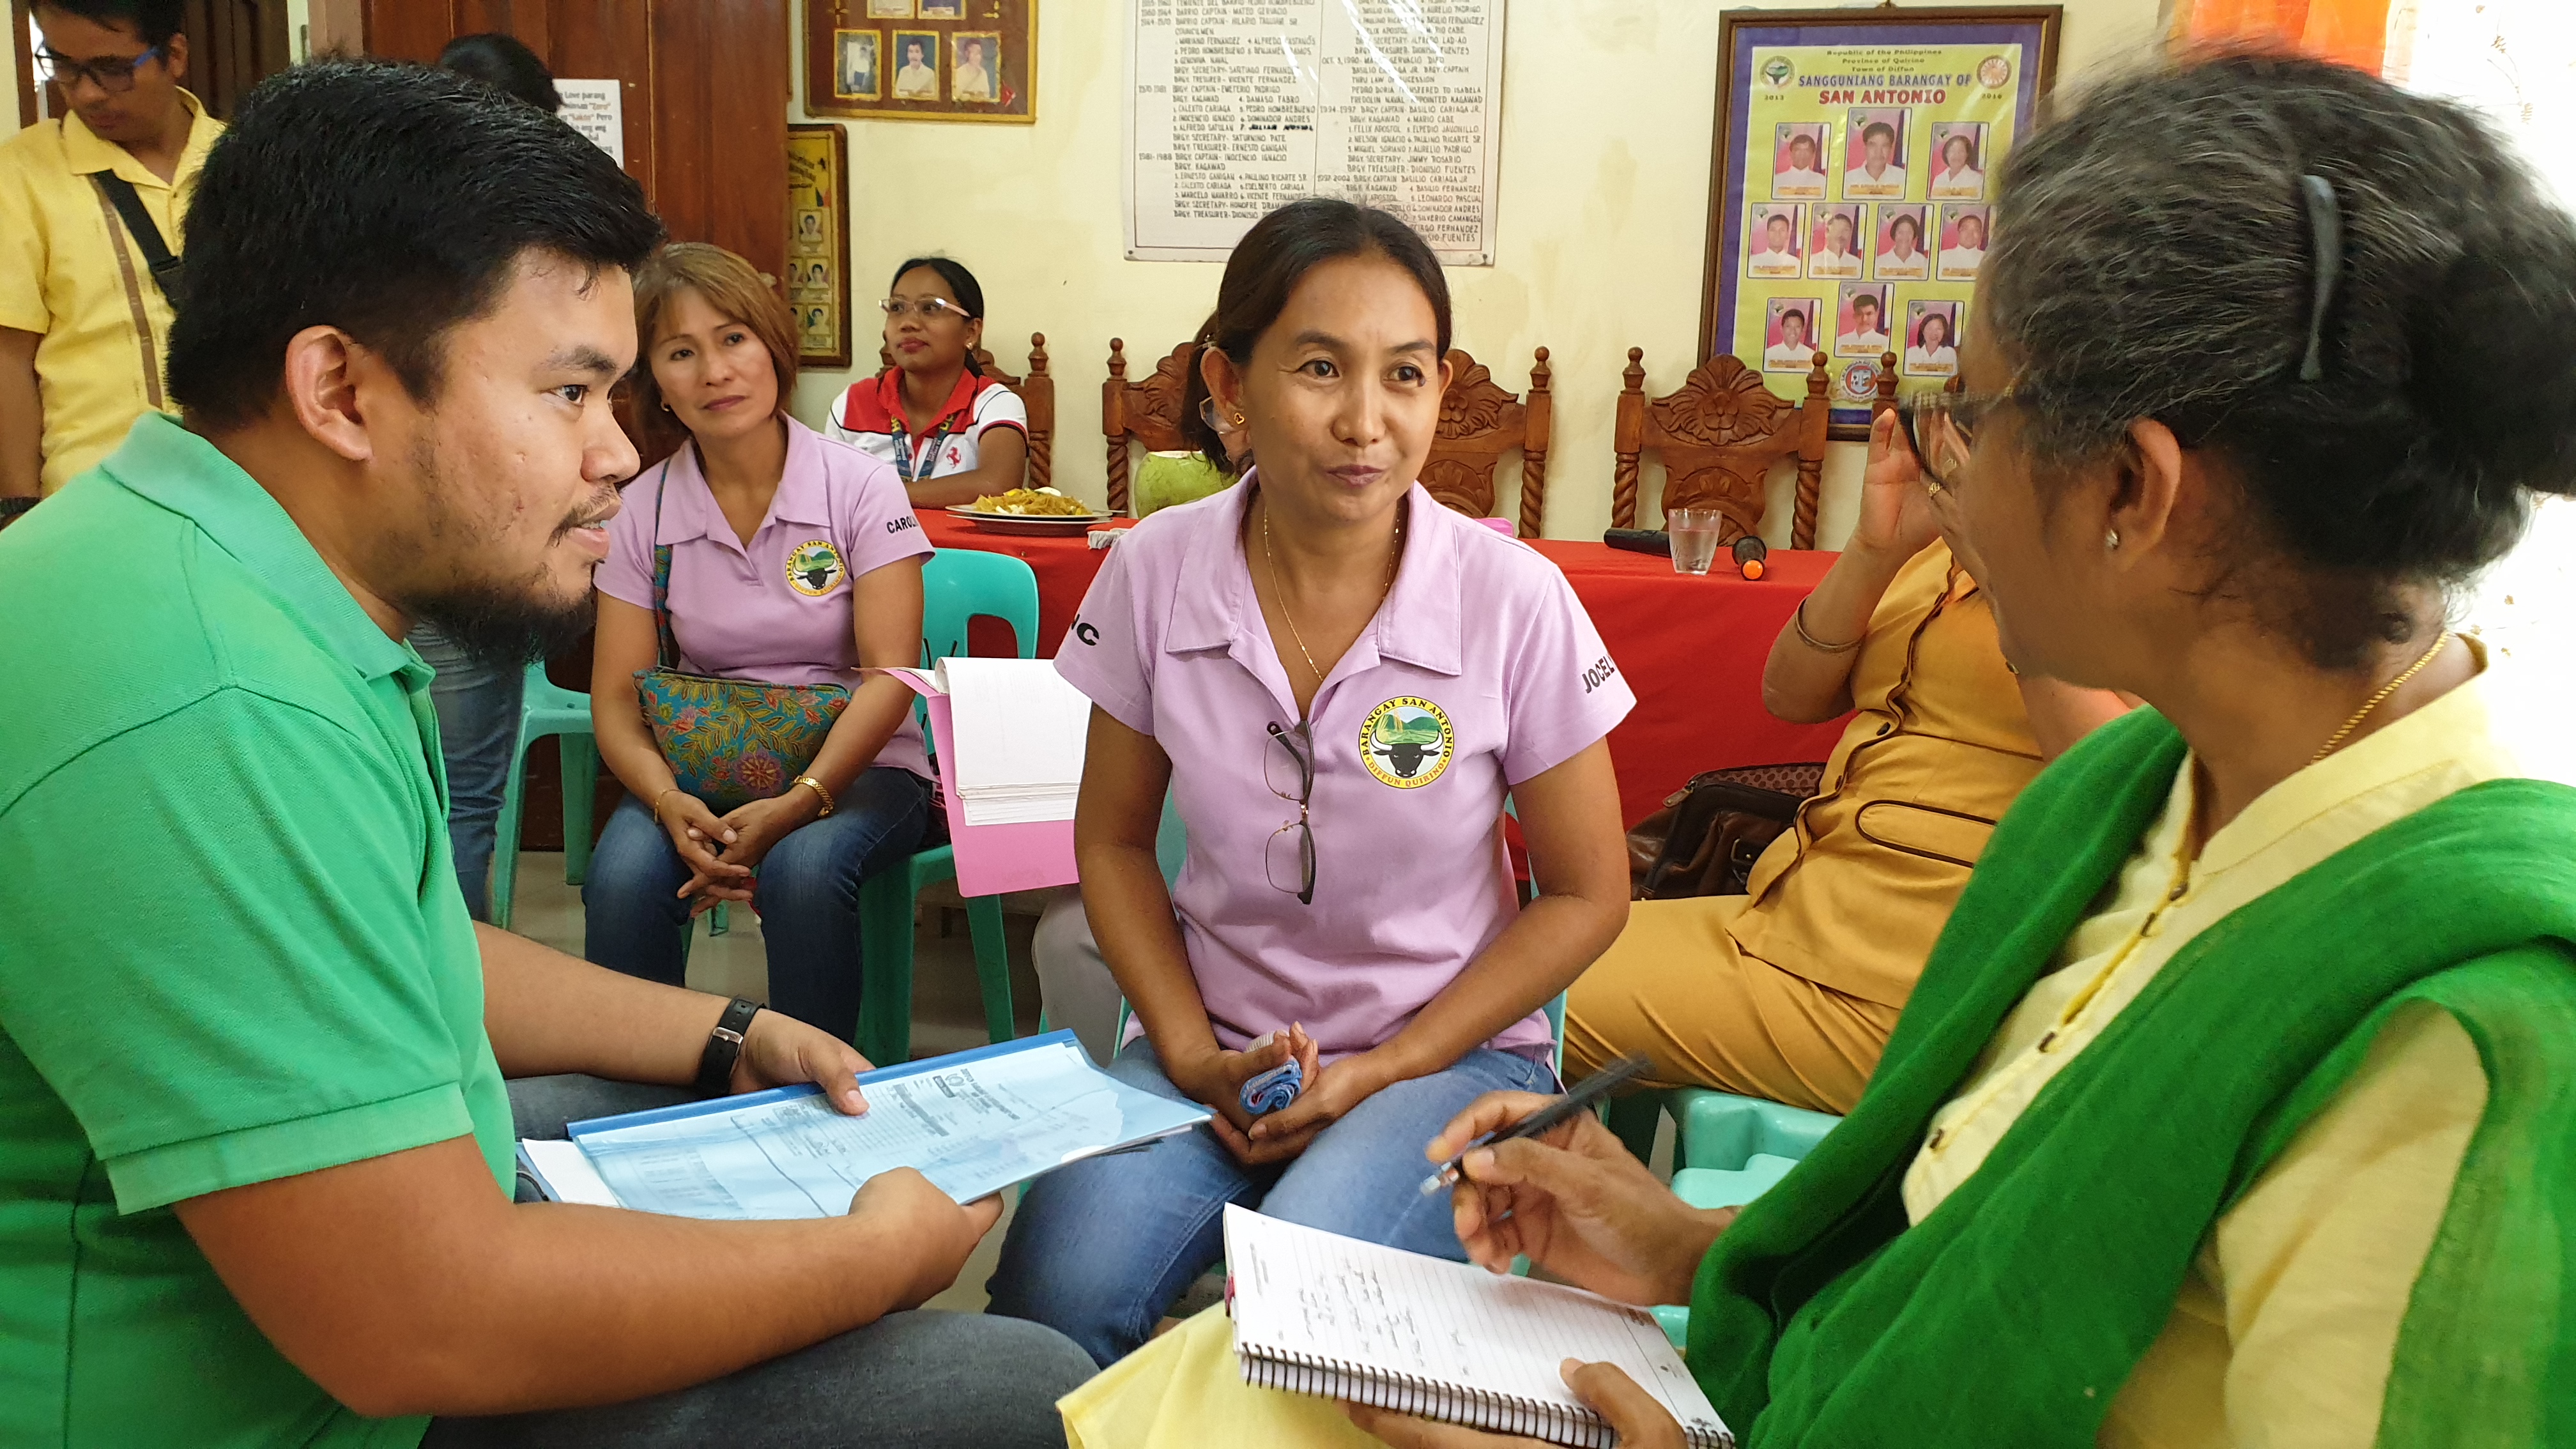 ENN’s Regional Knowledge Management Specialist, Charulatha Banerjee, interviews some Barangay Nutrition Scholars. 